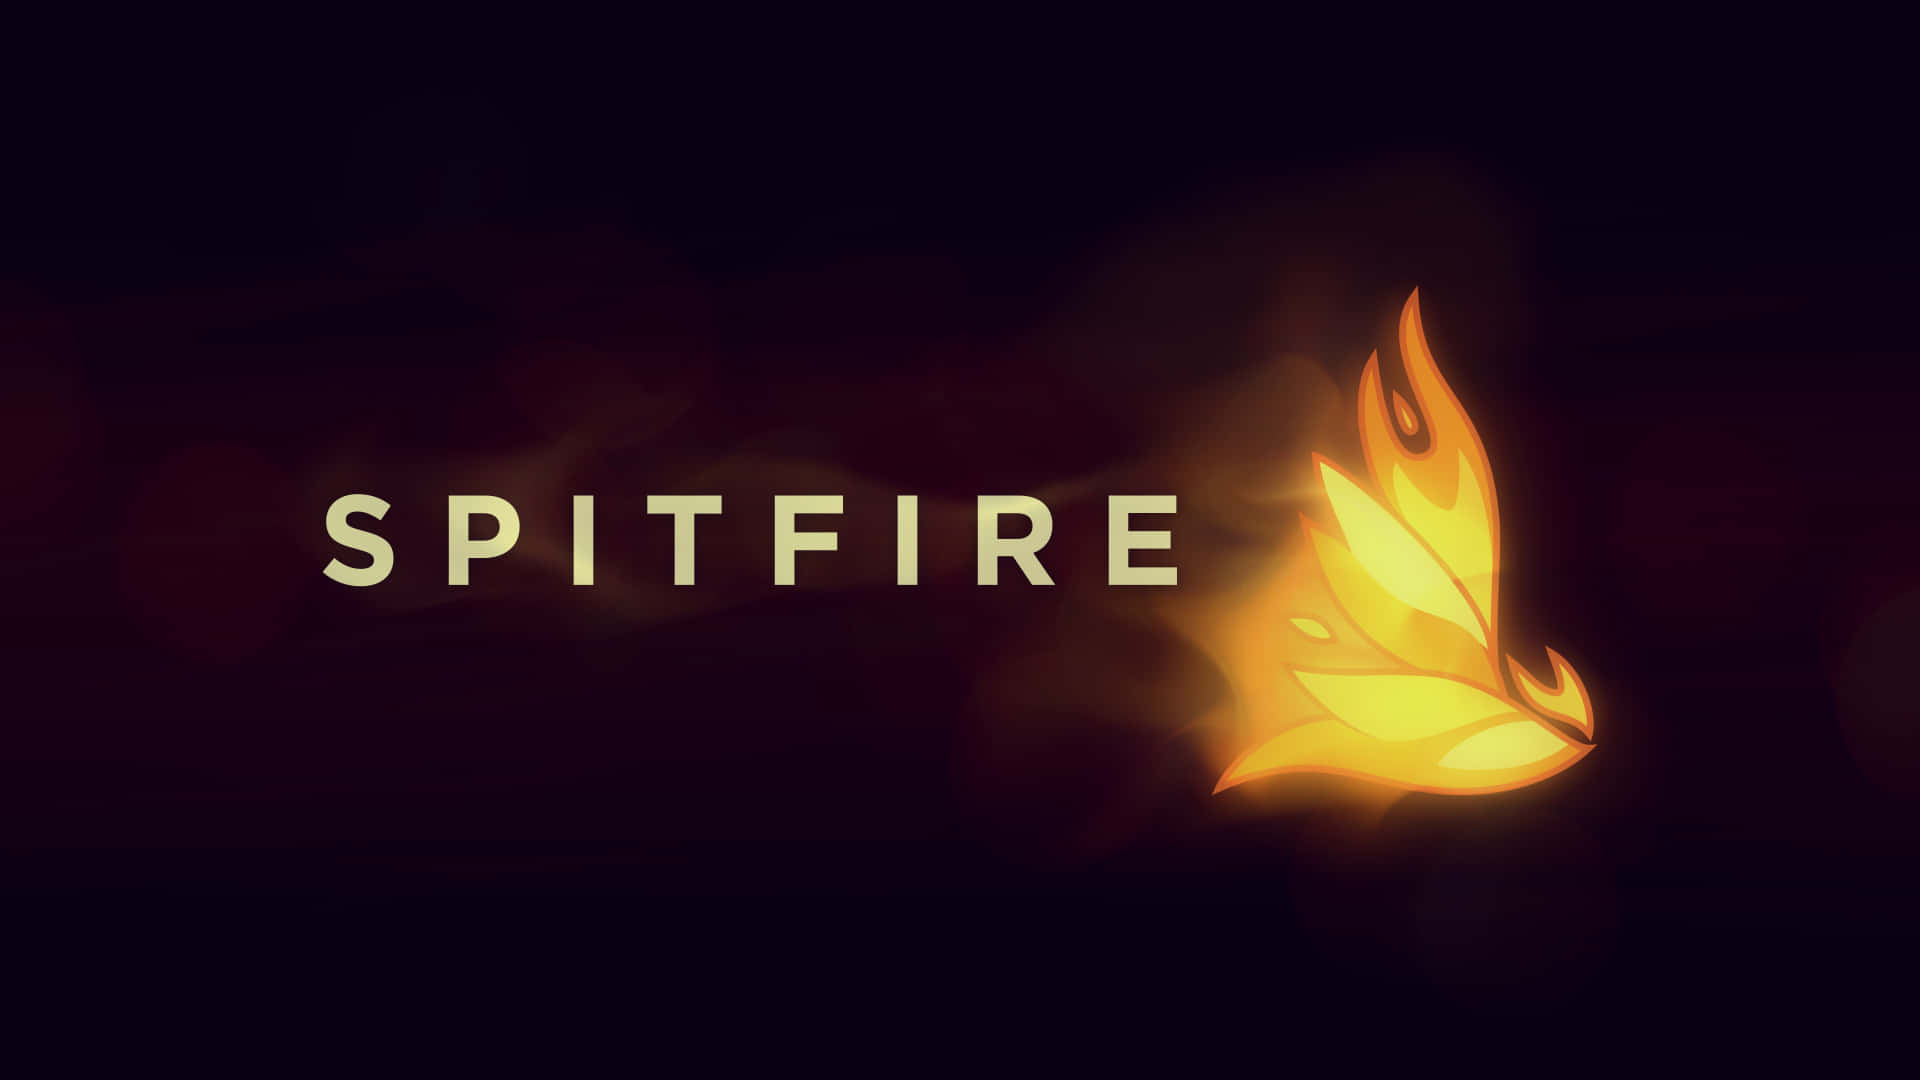 Spitfire - A Fire Logo On A Black Background Wallpaper